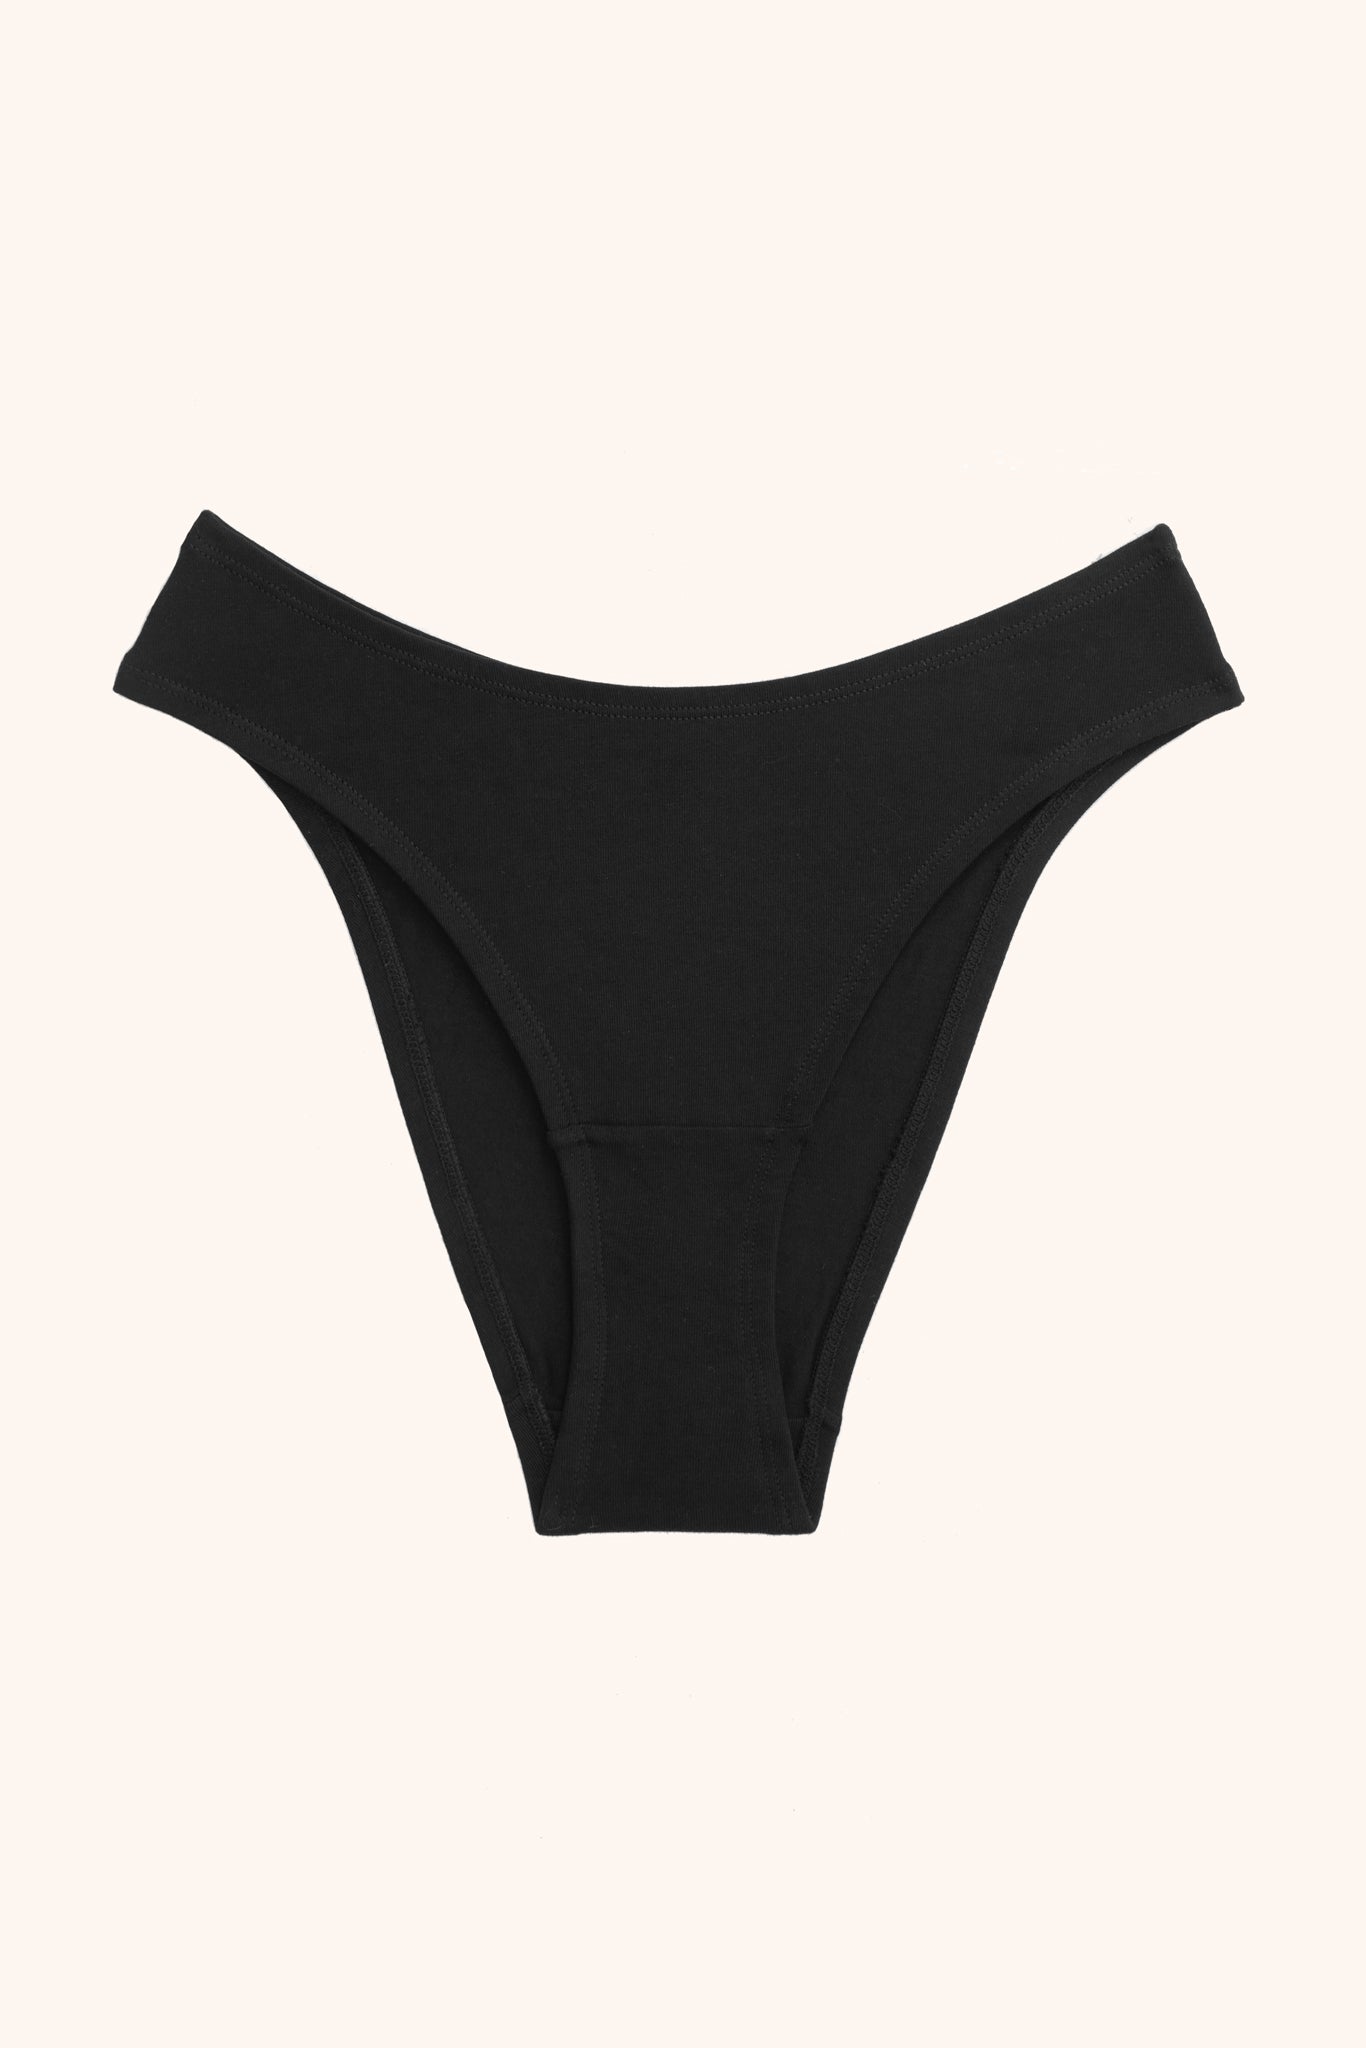 Meryl cotton high cut panties- black